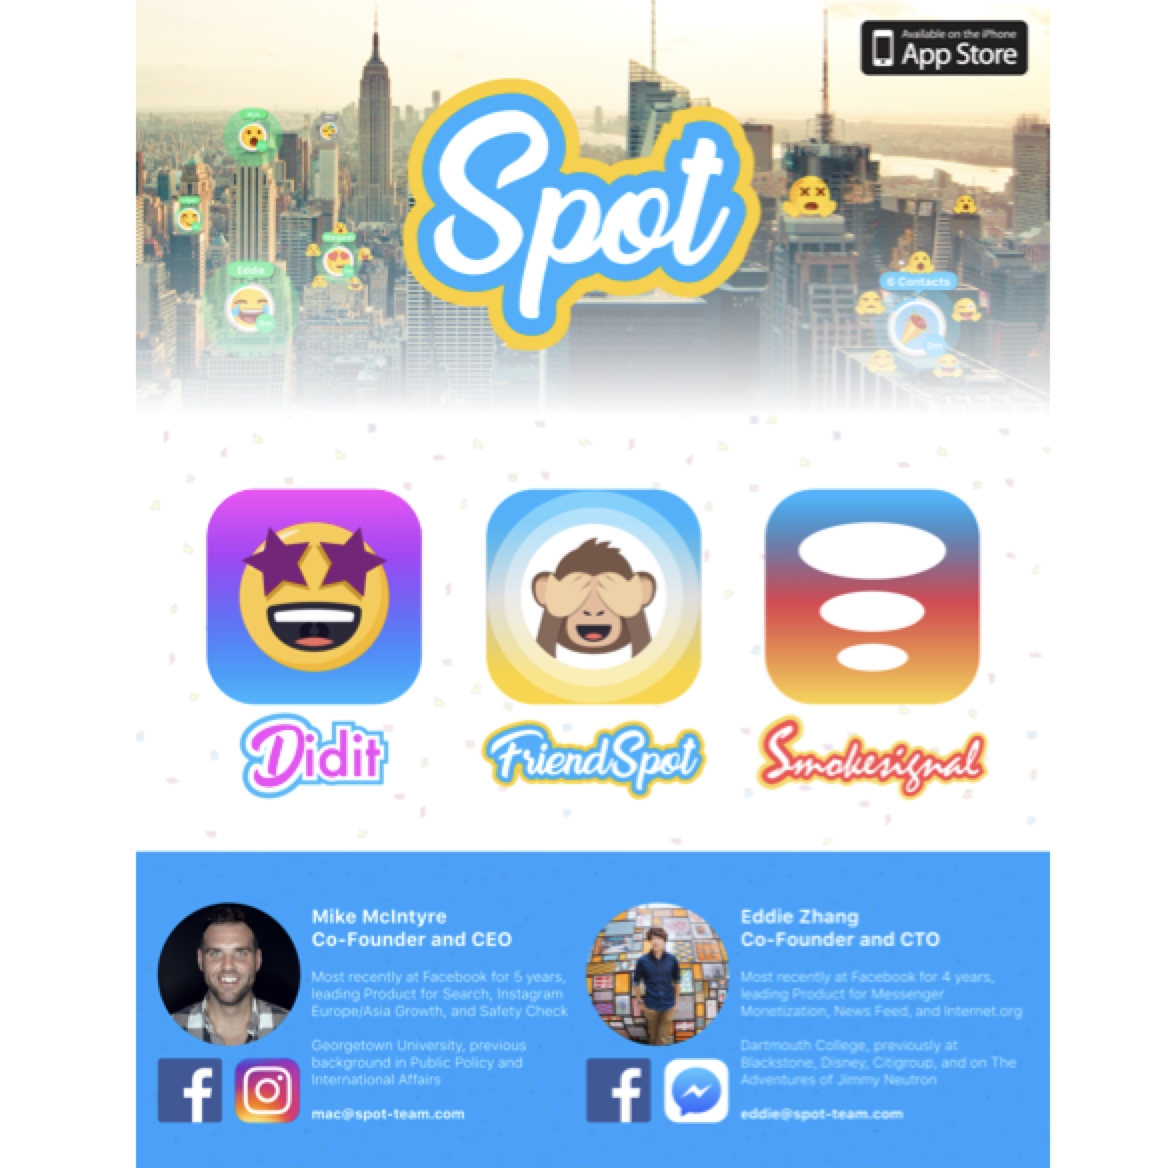 App advertisement for Spot